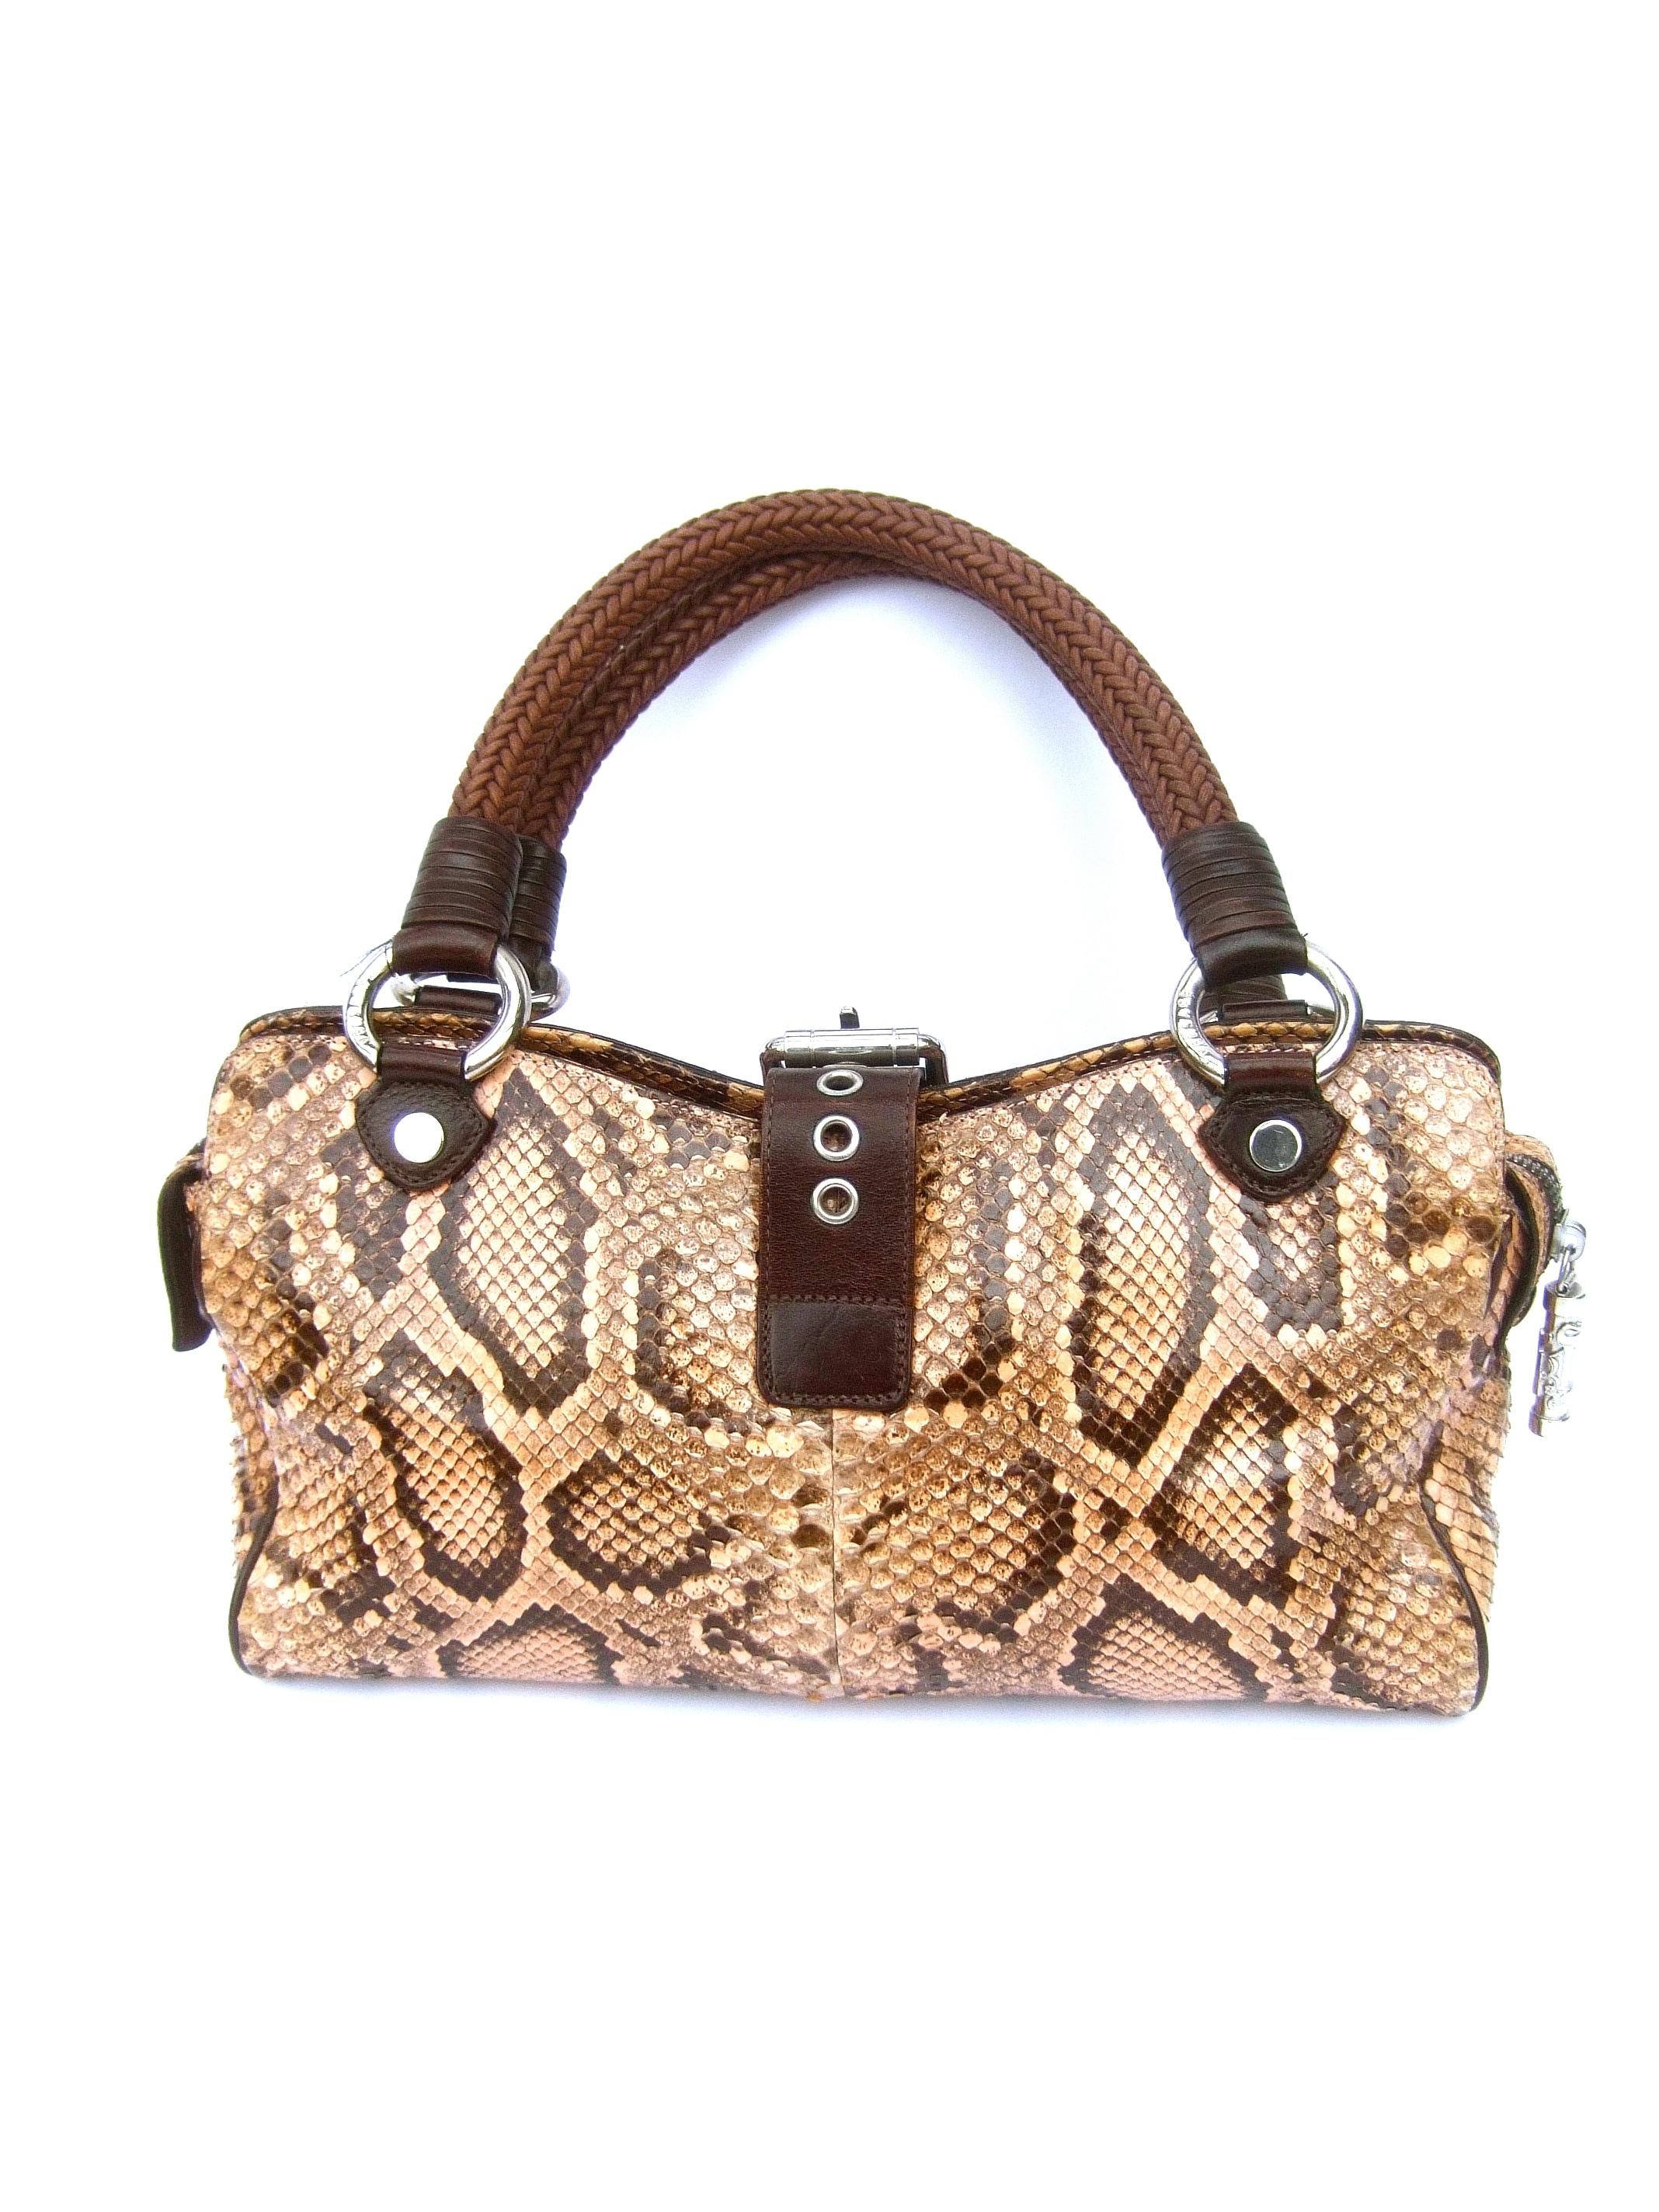 Versace Snakeskin Leather Trim Italian Handbag circa 1990s 2